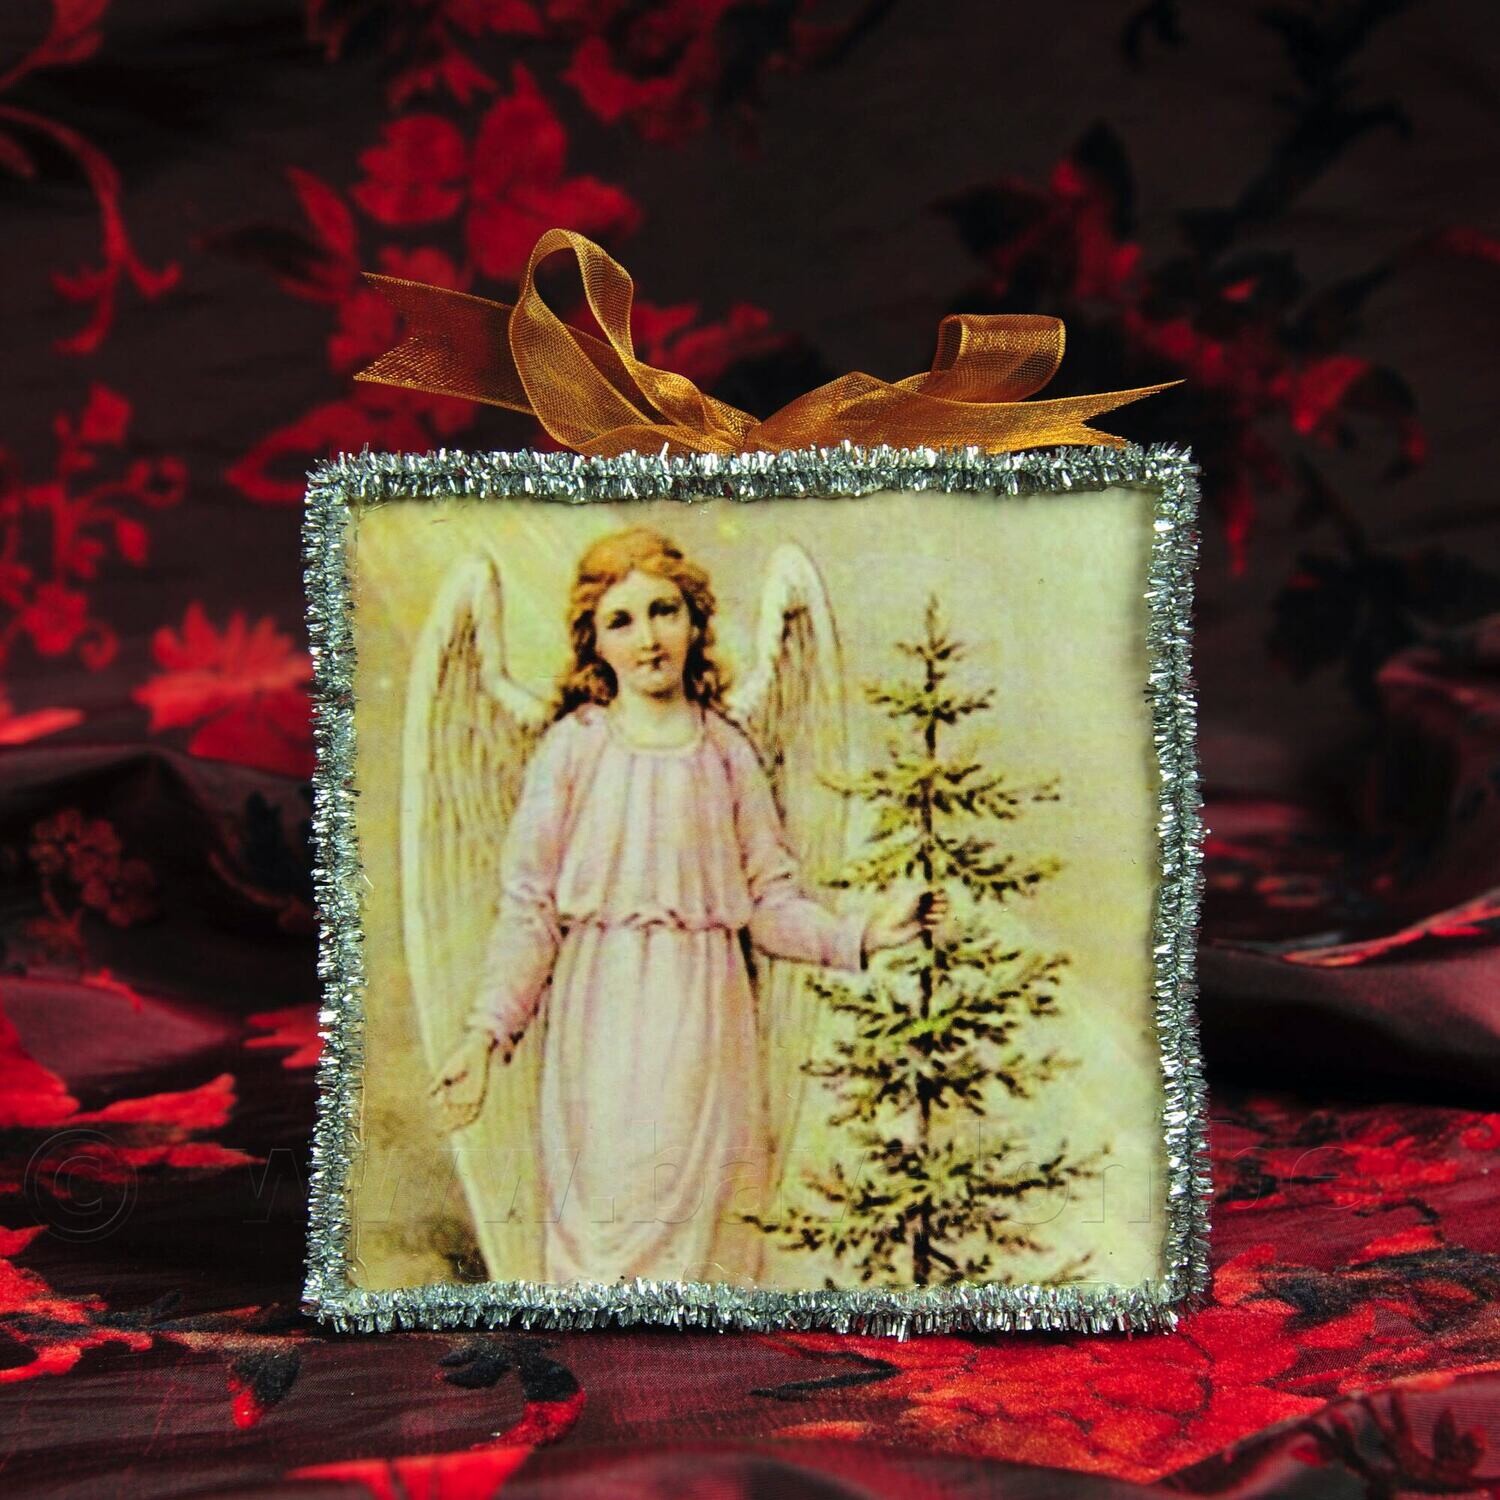 Kerst-doosje vierkant 10cm met vintage afbeelding engel en spar versierd met fijne zilverslinger rondom